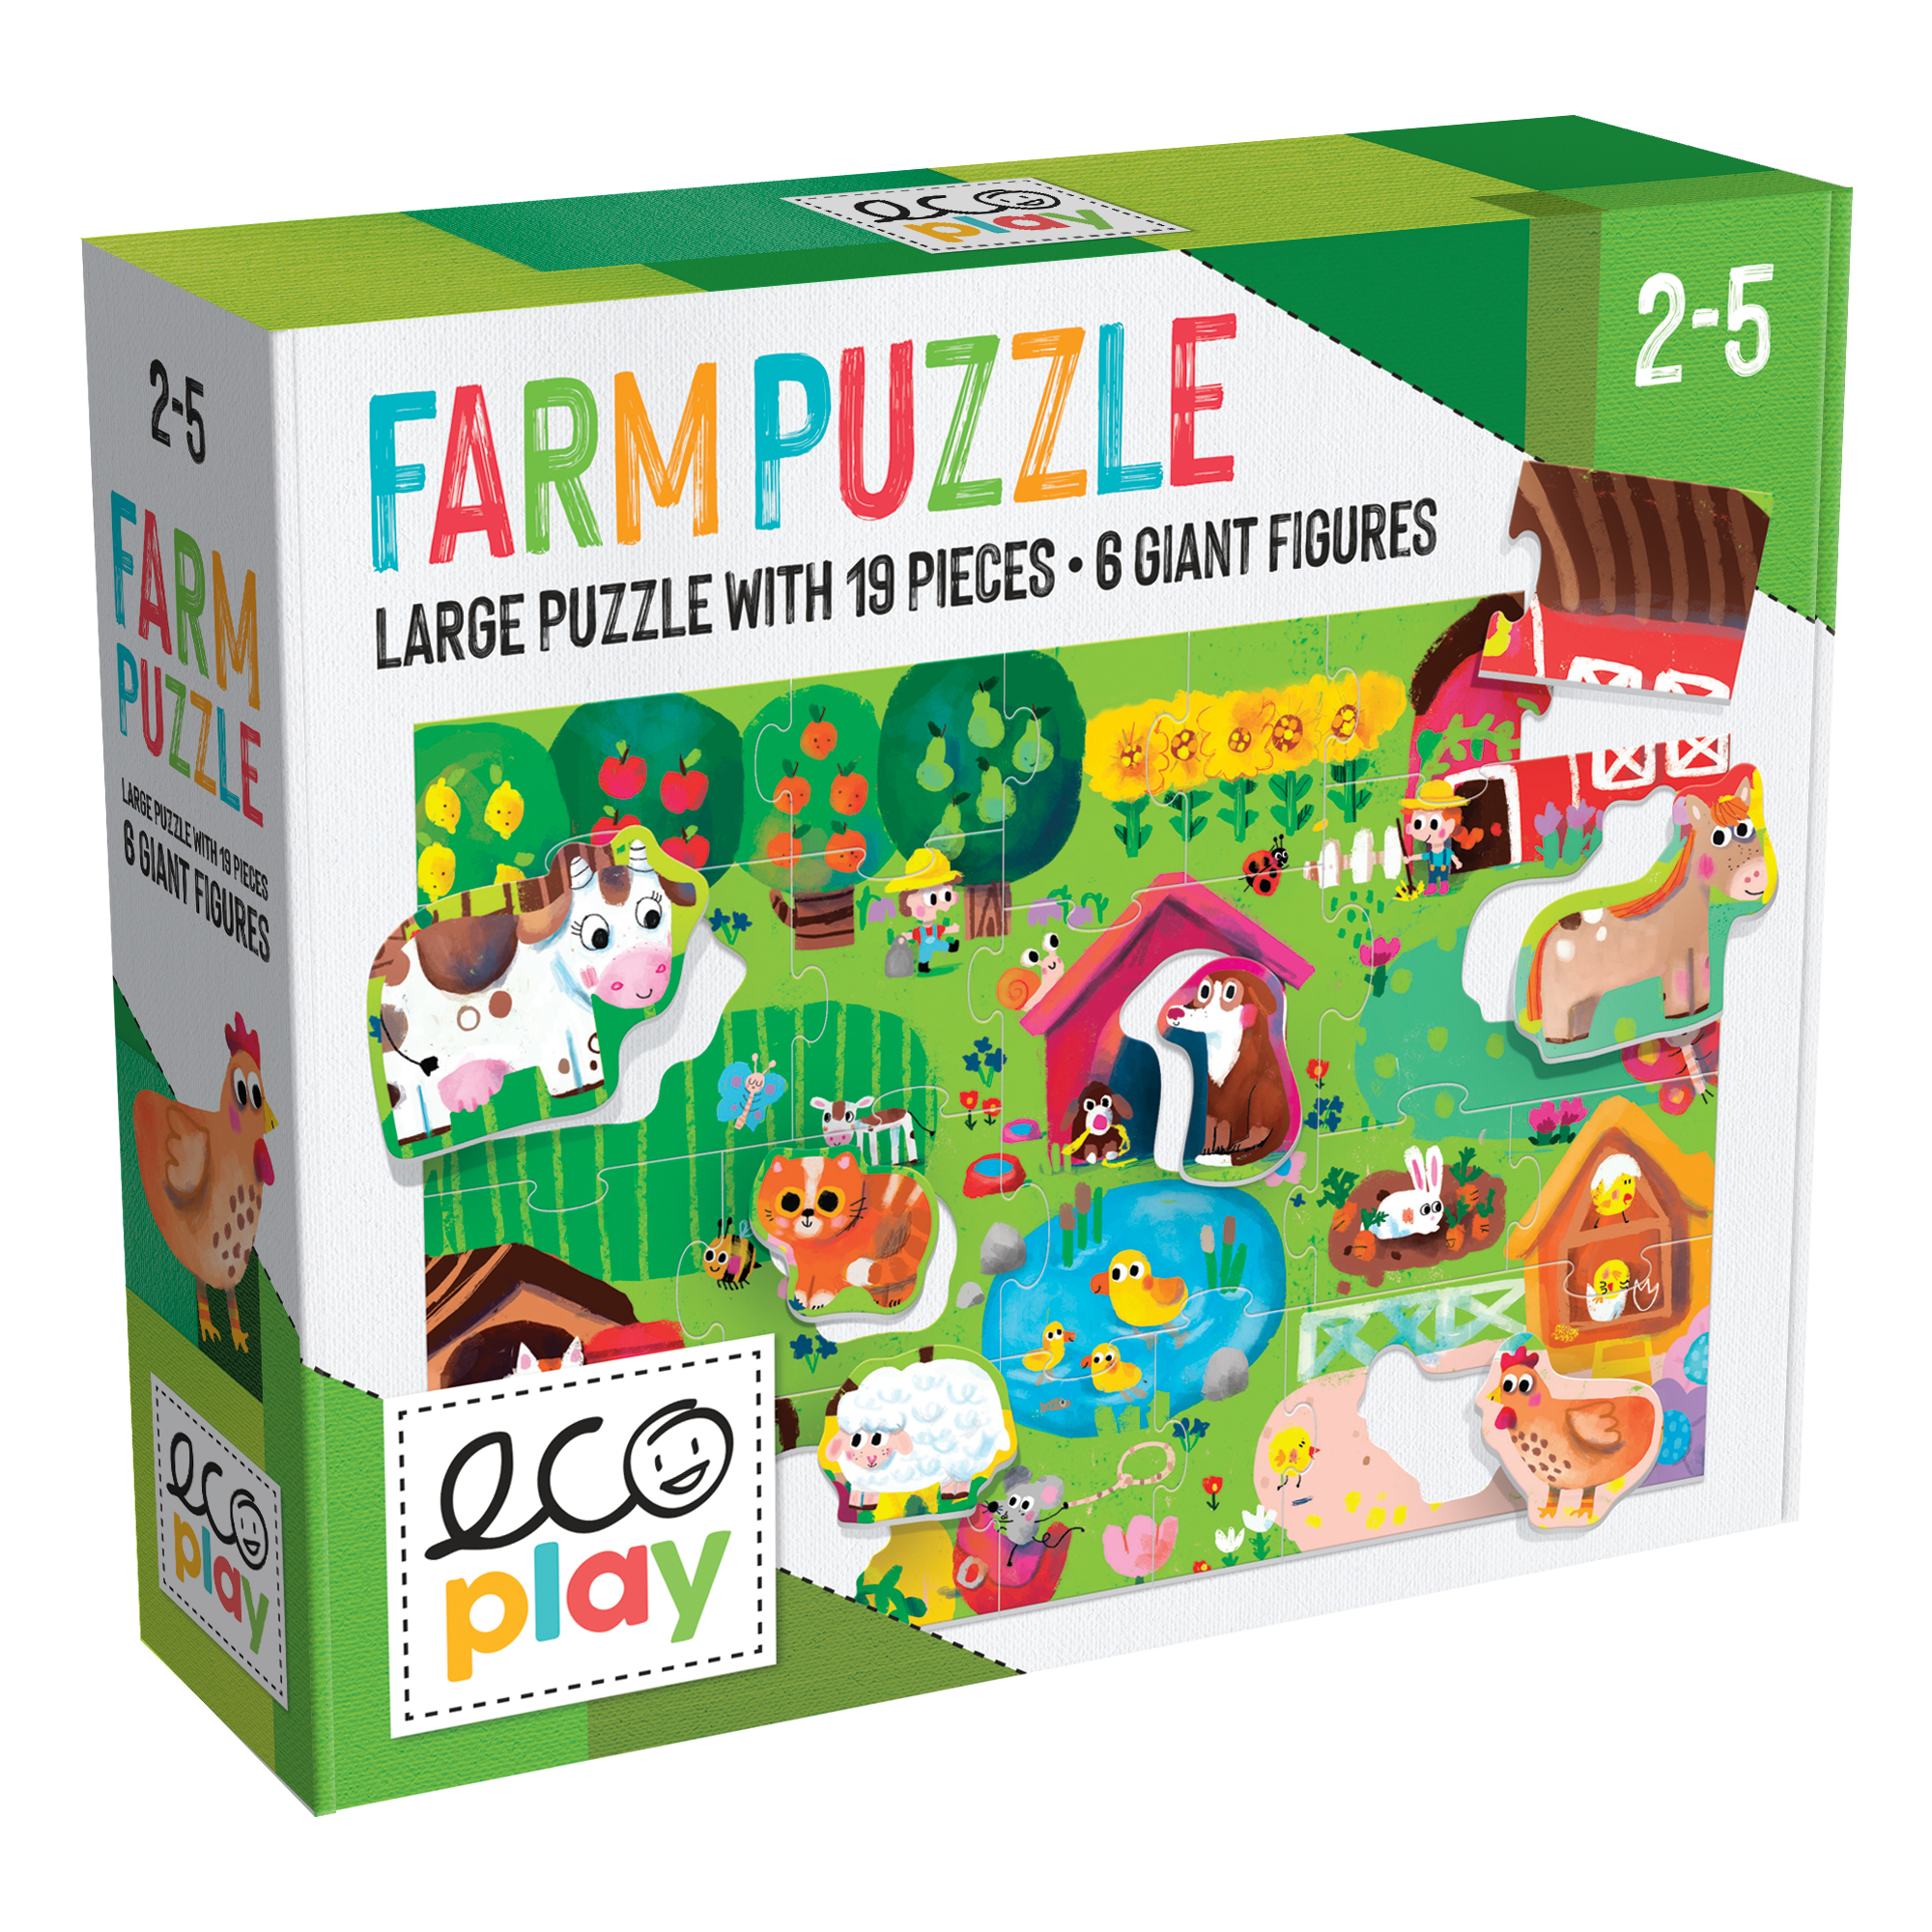 Maxi shaped puzzle farm. 19 pezzi con 6 grandi sagome. ecoplay.	2-5 anni - HEADU